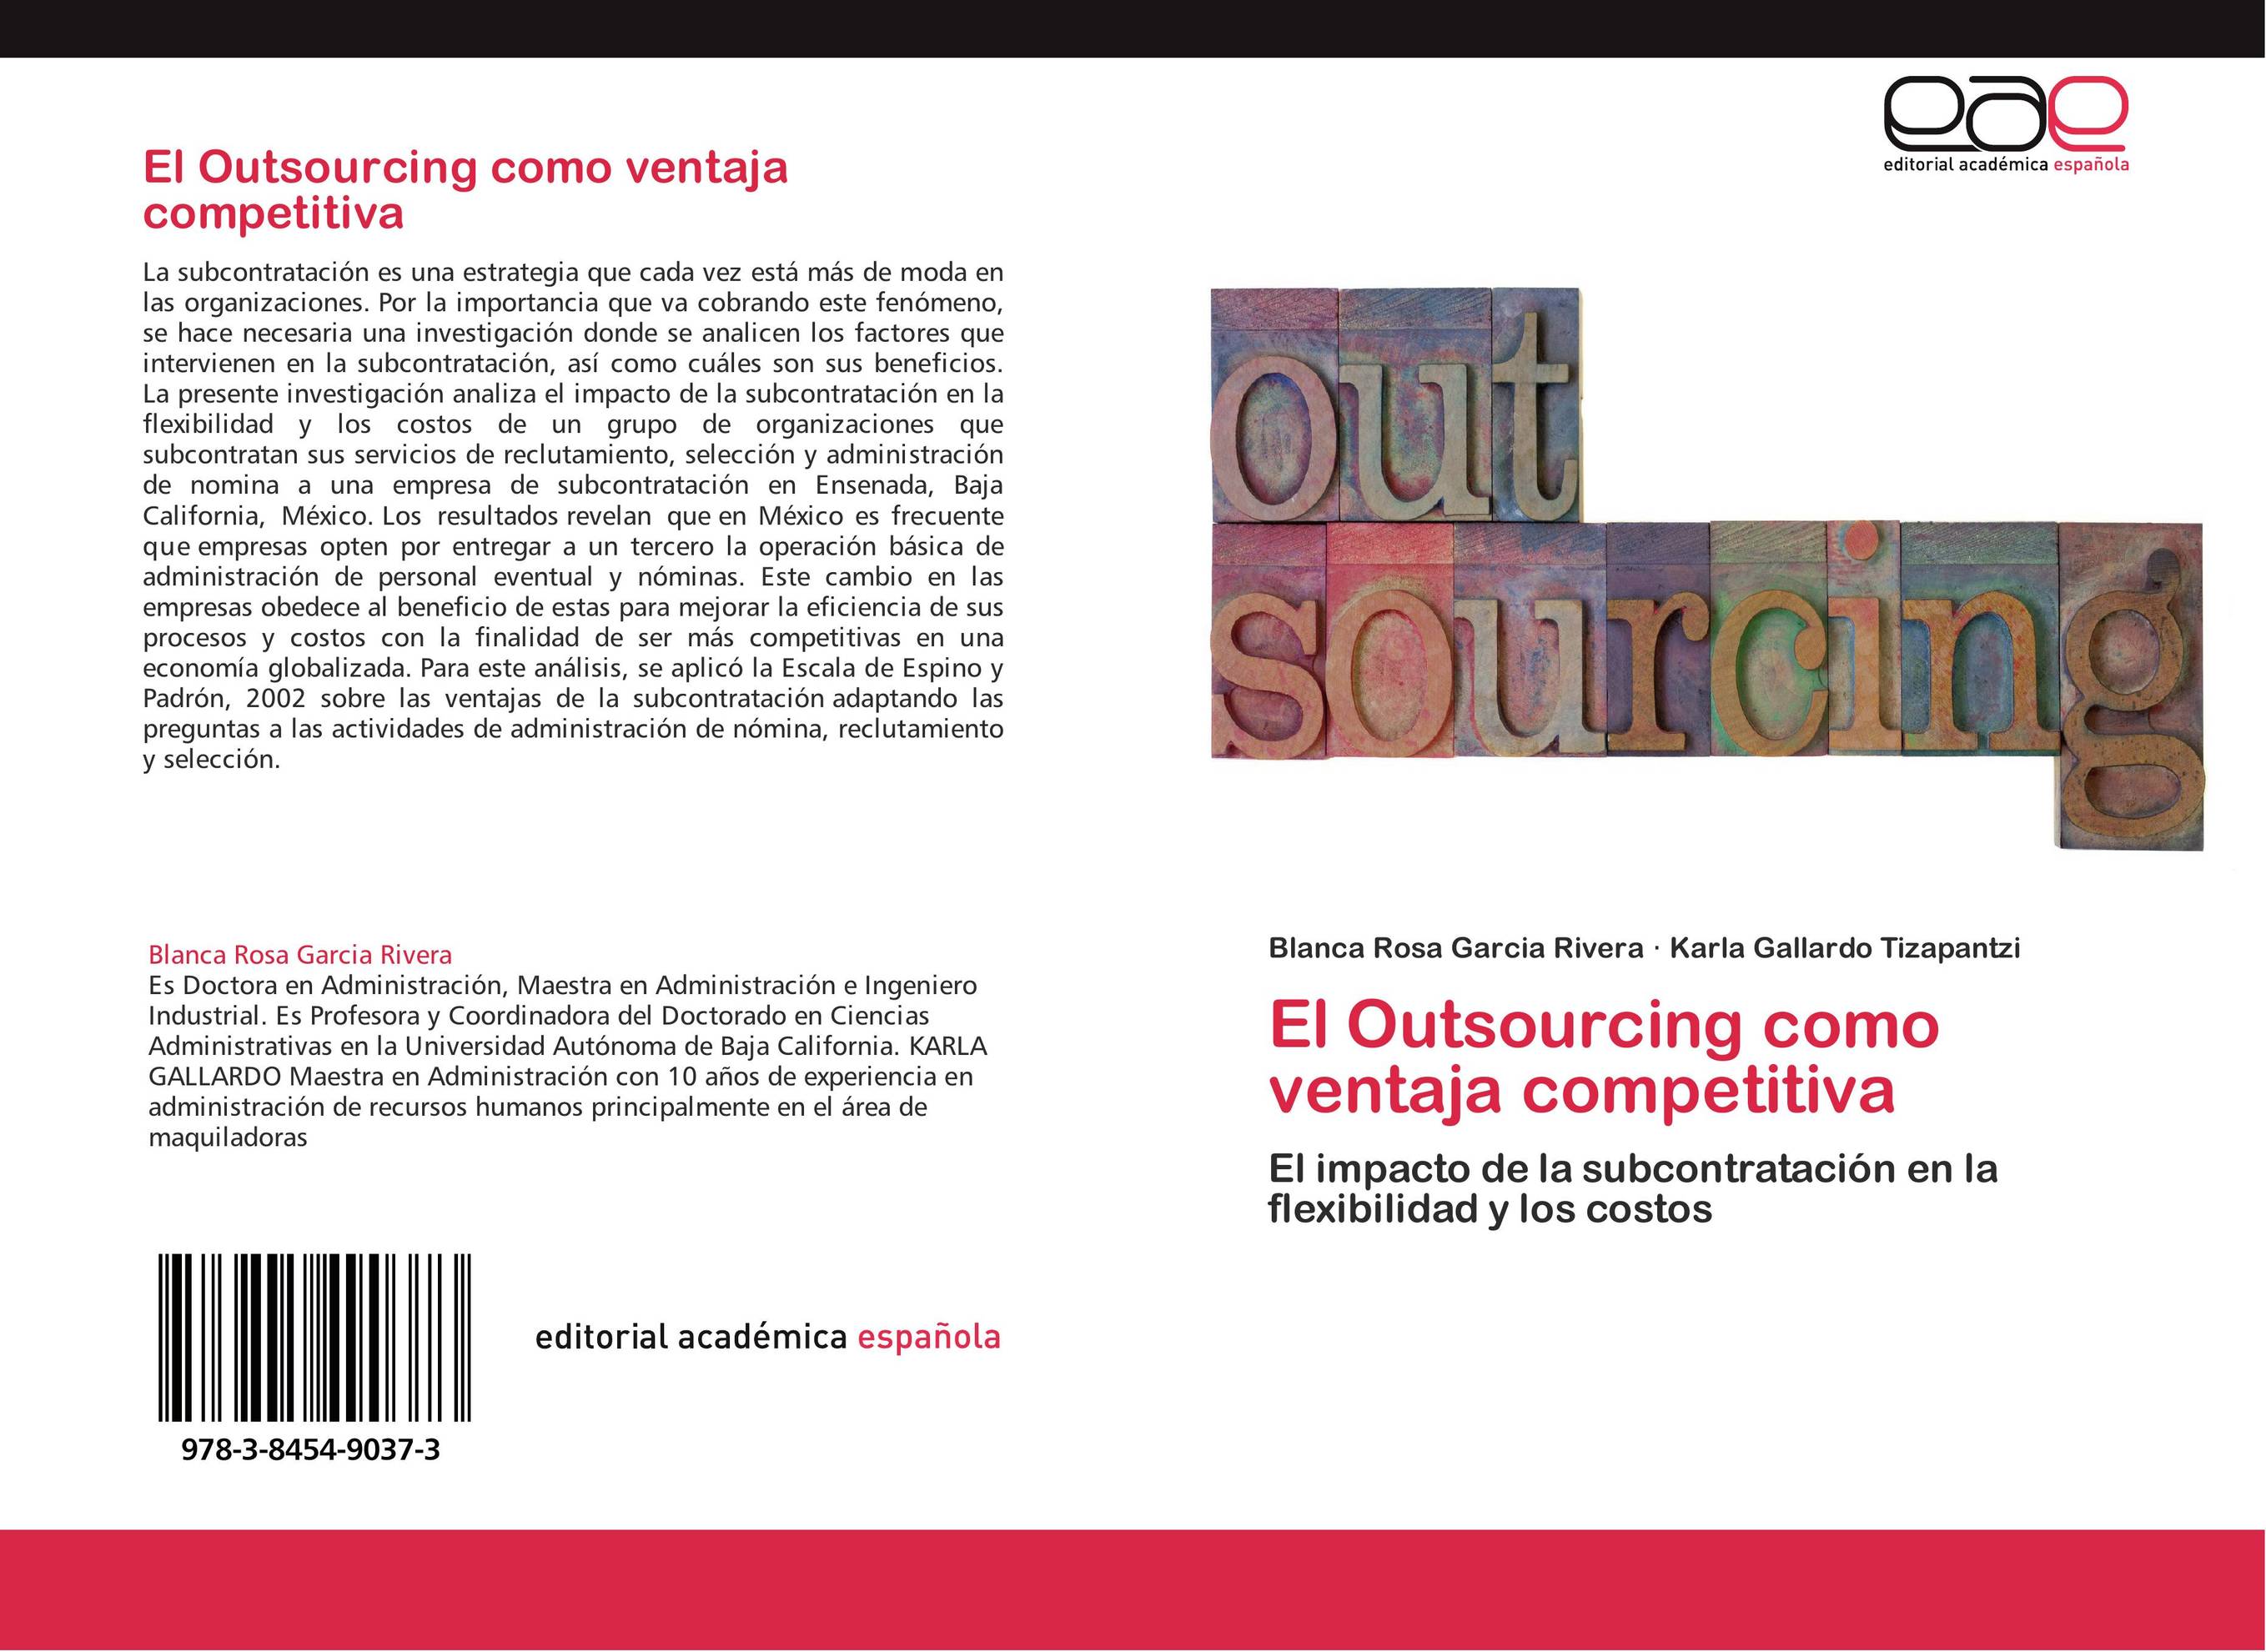 El Outsourcing como ventaja competitiva